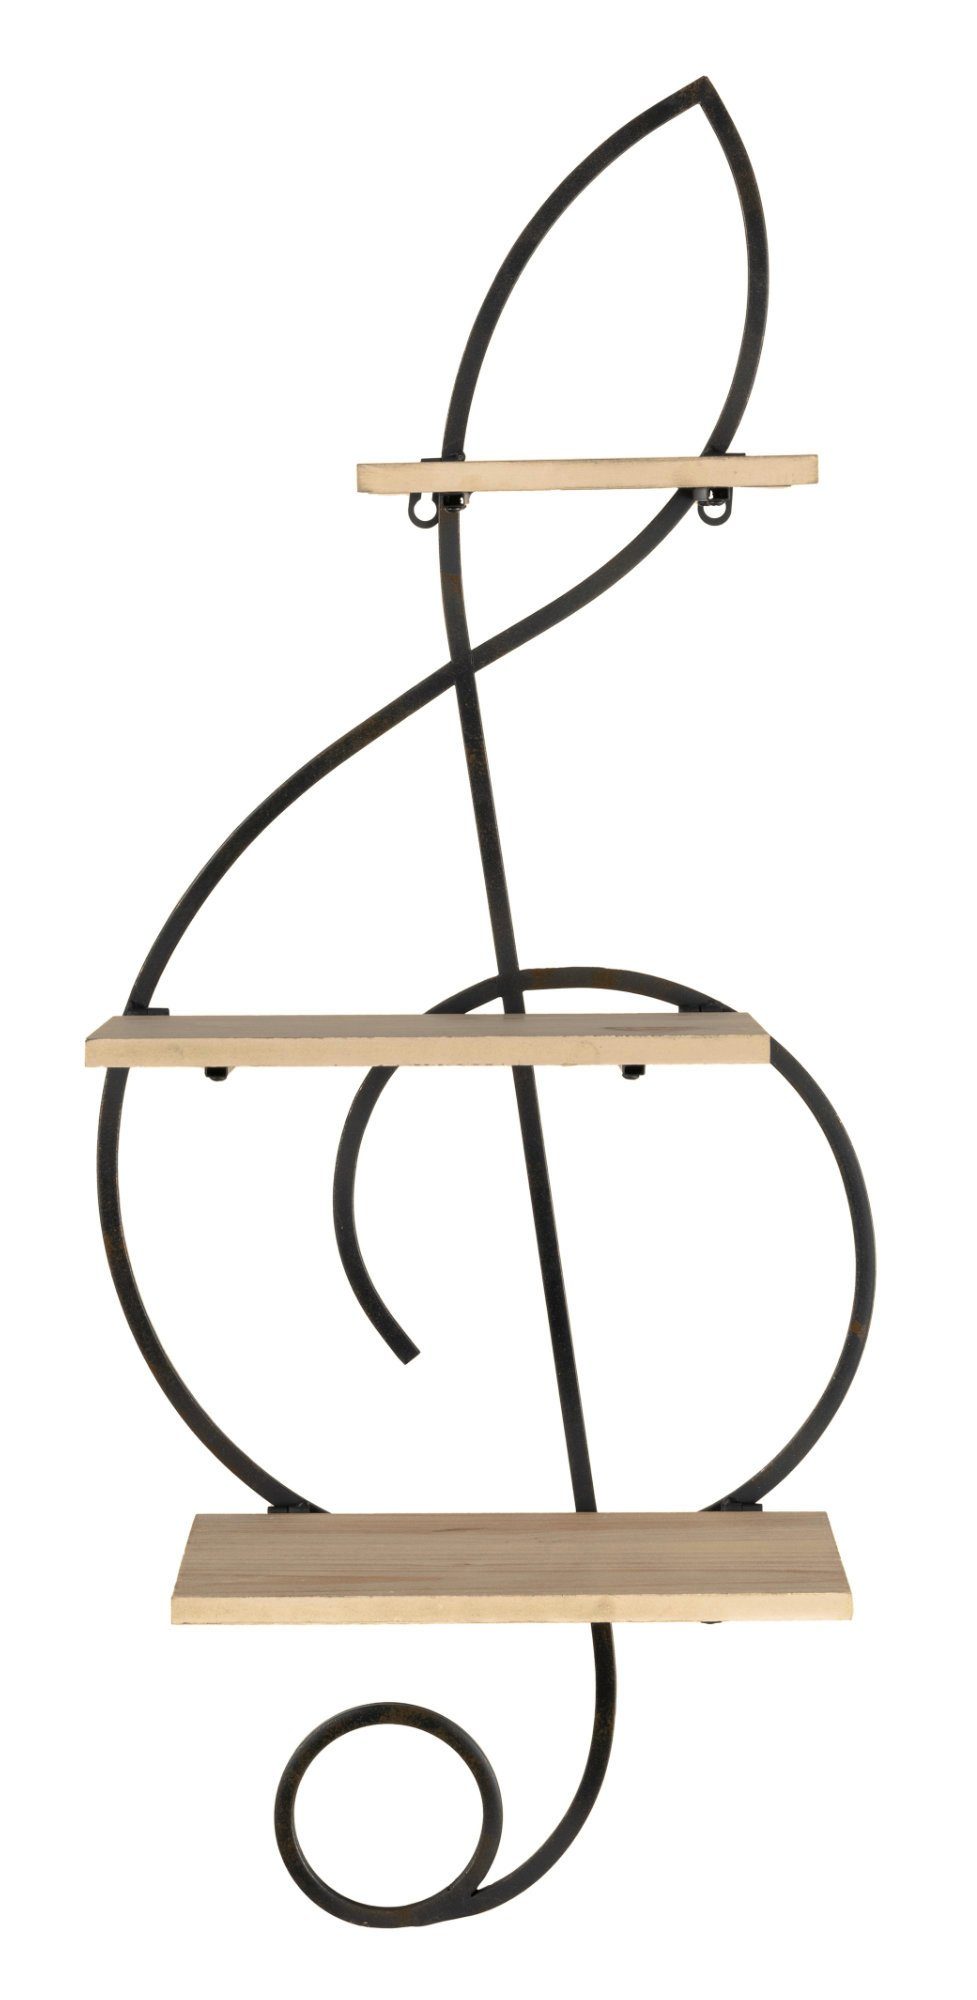 joycraft Wandregal NSR-90 Hängeregal in Notenschlüsselform, Aged-Look Musikzimmer-Regal im Violinschlüssel-Design